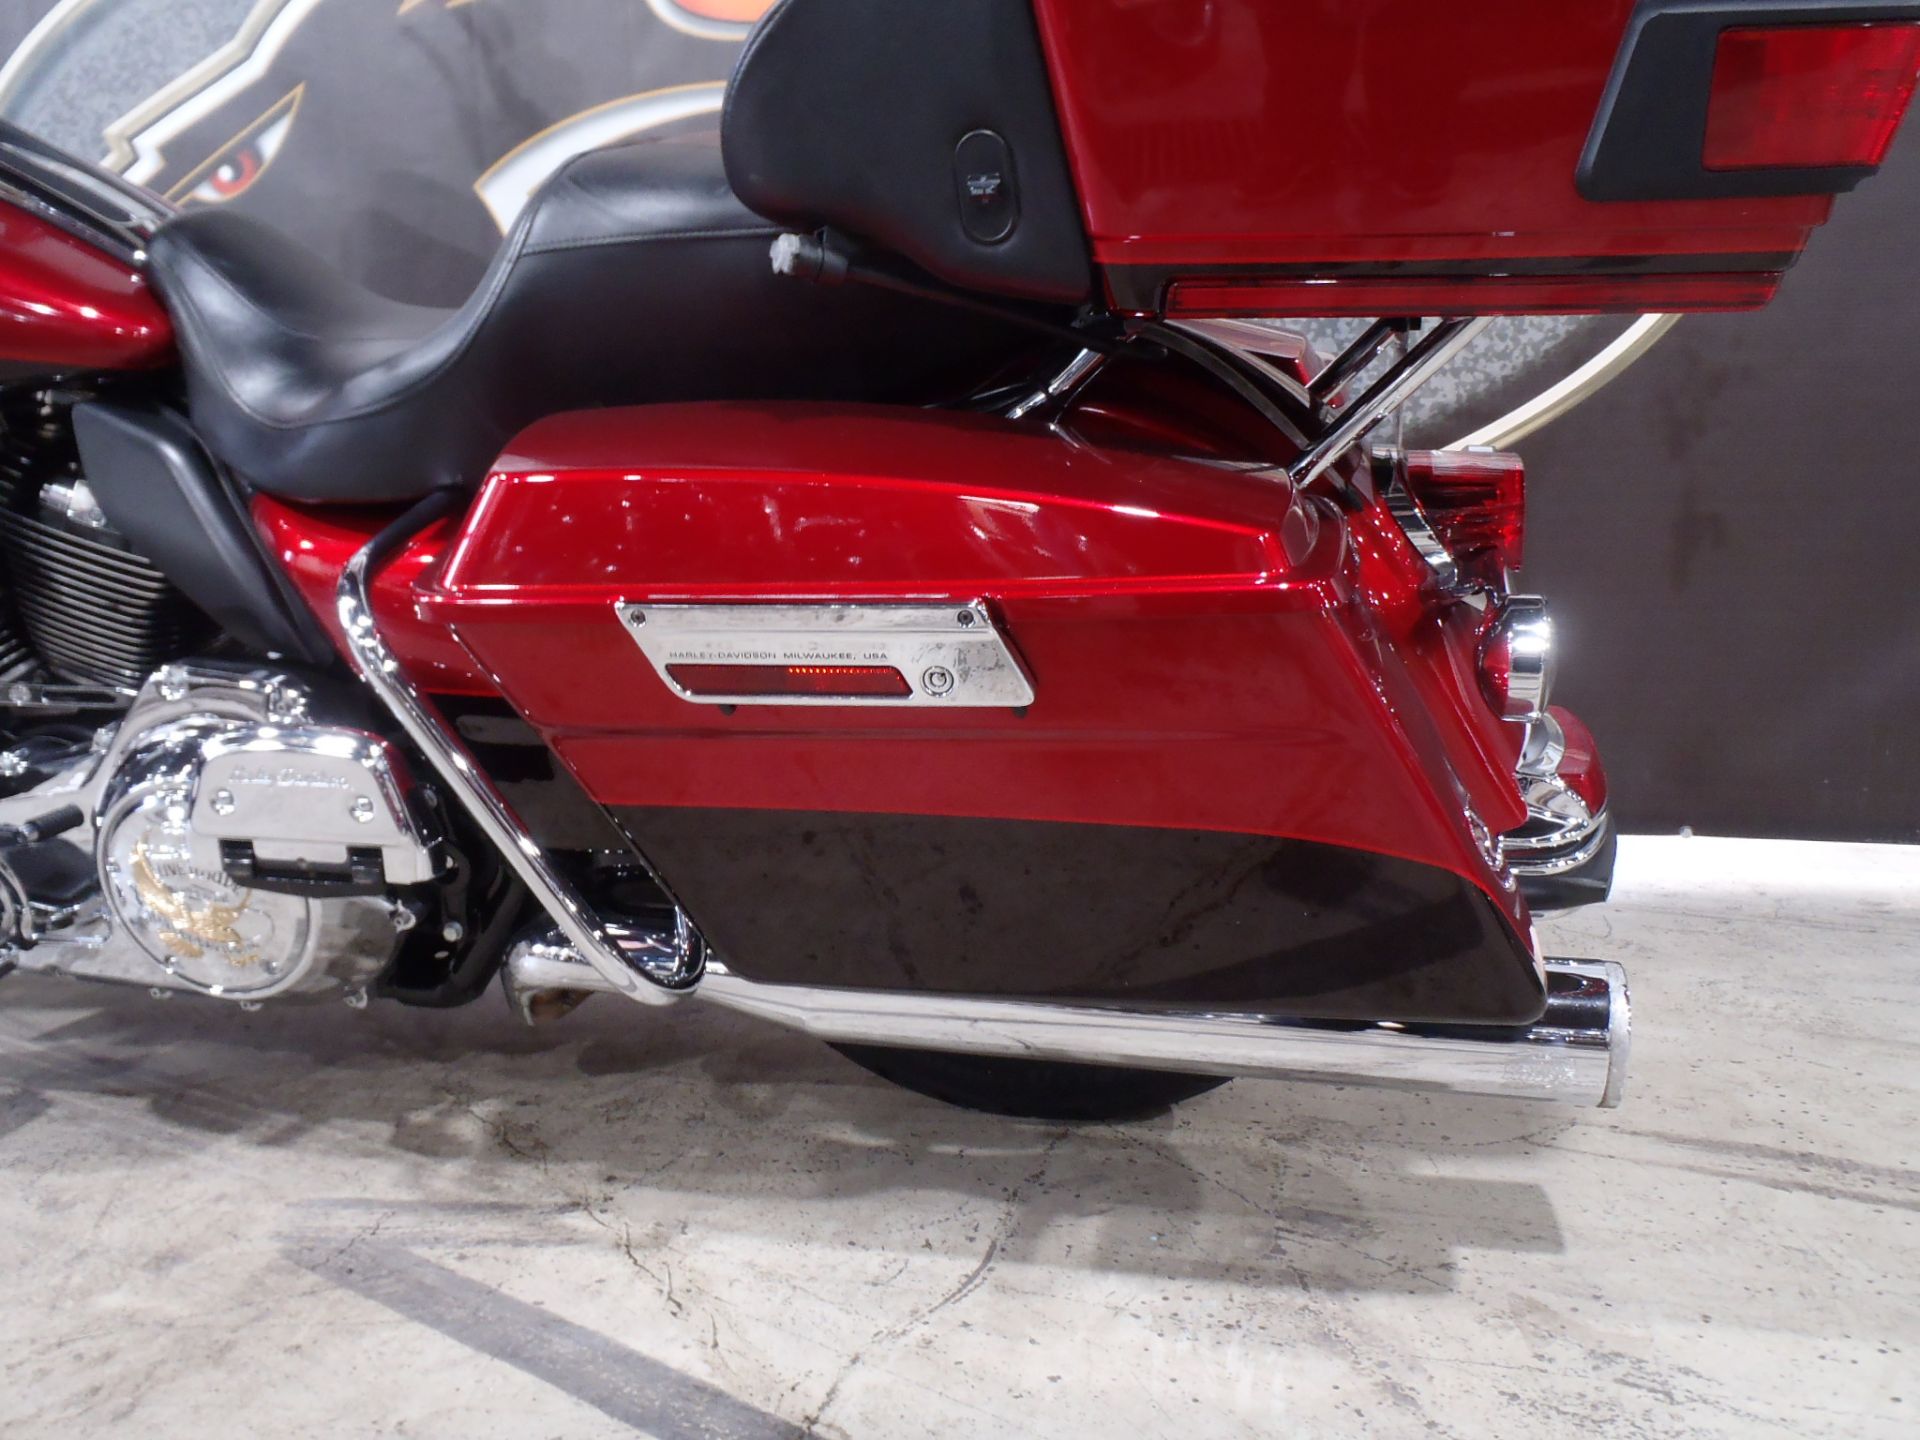 2012 Harley-Davidson Electra Glide® Ultra Limited in South Saint Paul, Minnesota - Photo 19